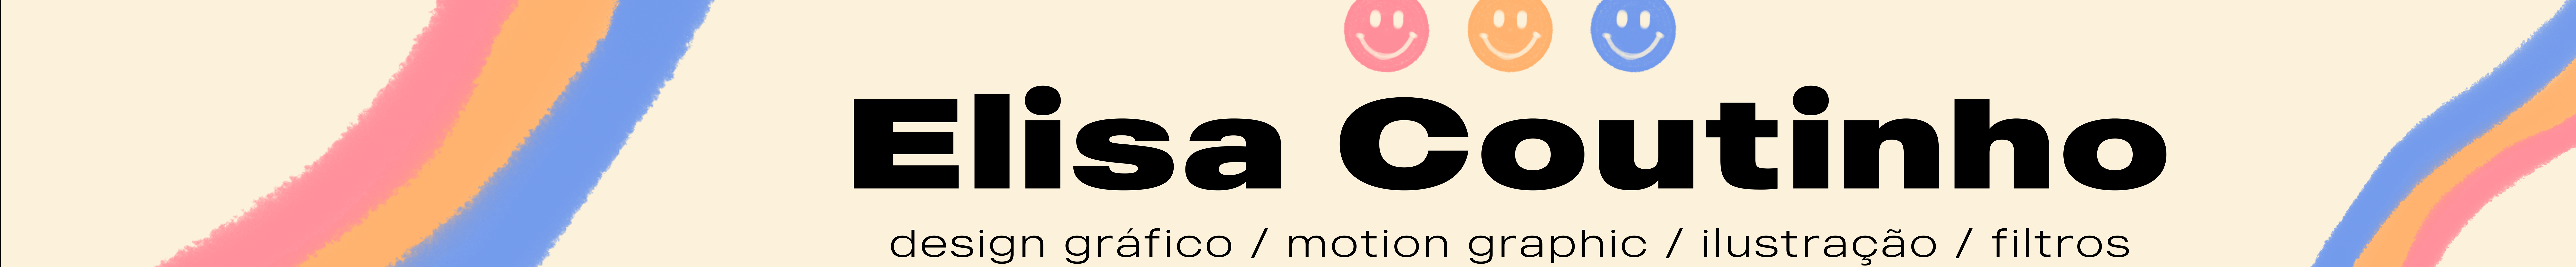 Elisa Coutinho's profile banner